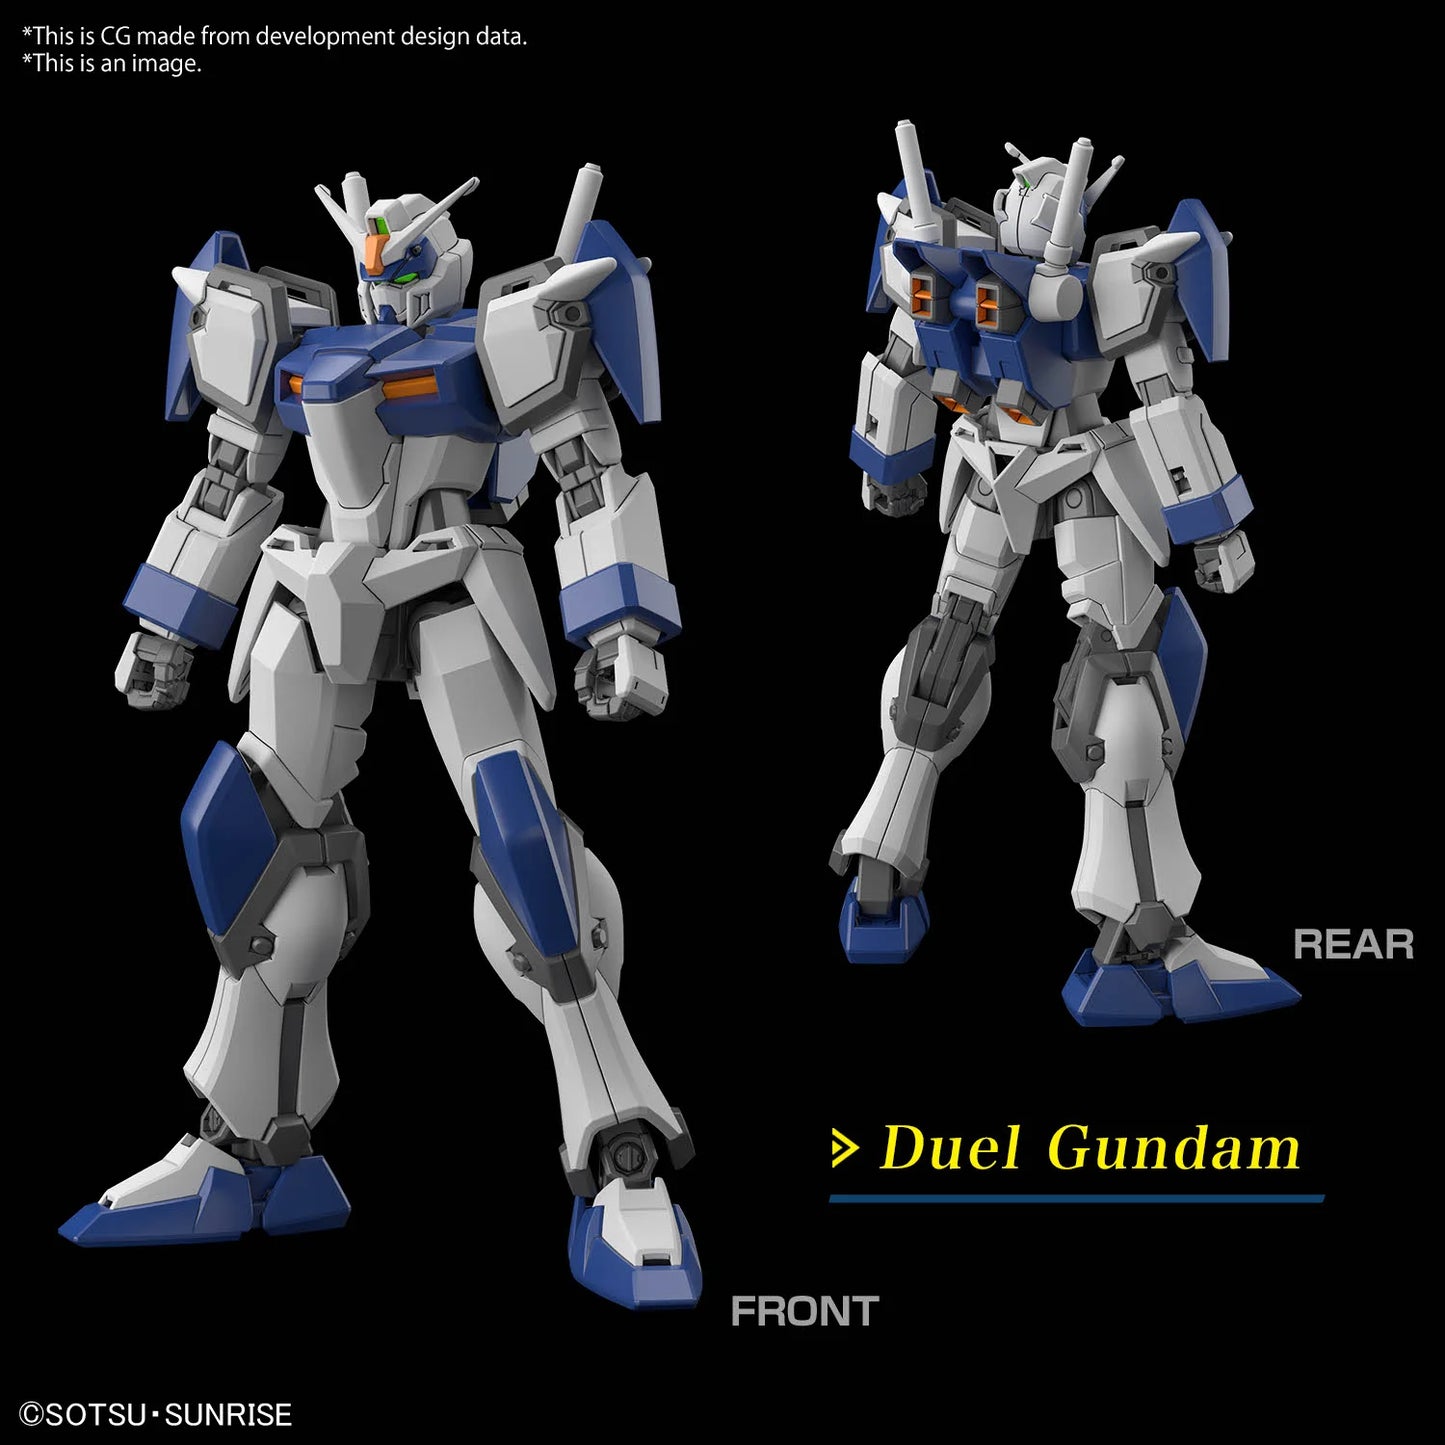 GUNDAM - HG 1/144 - Duel Blitz Gundam - Model Kit